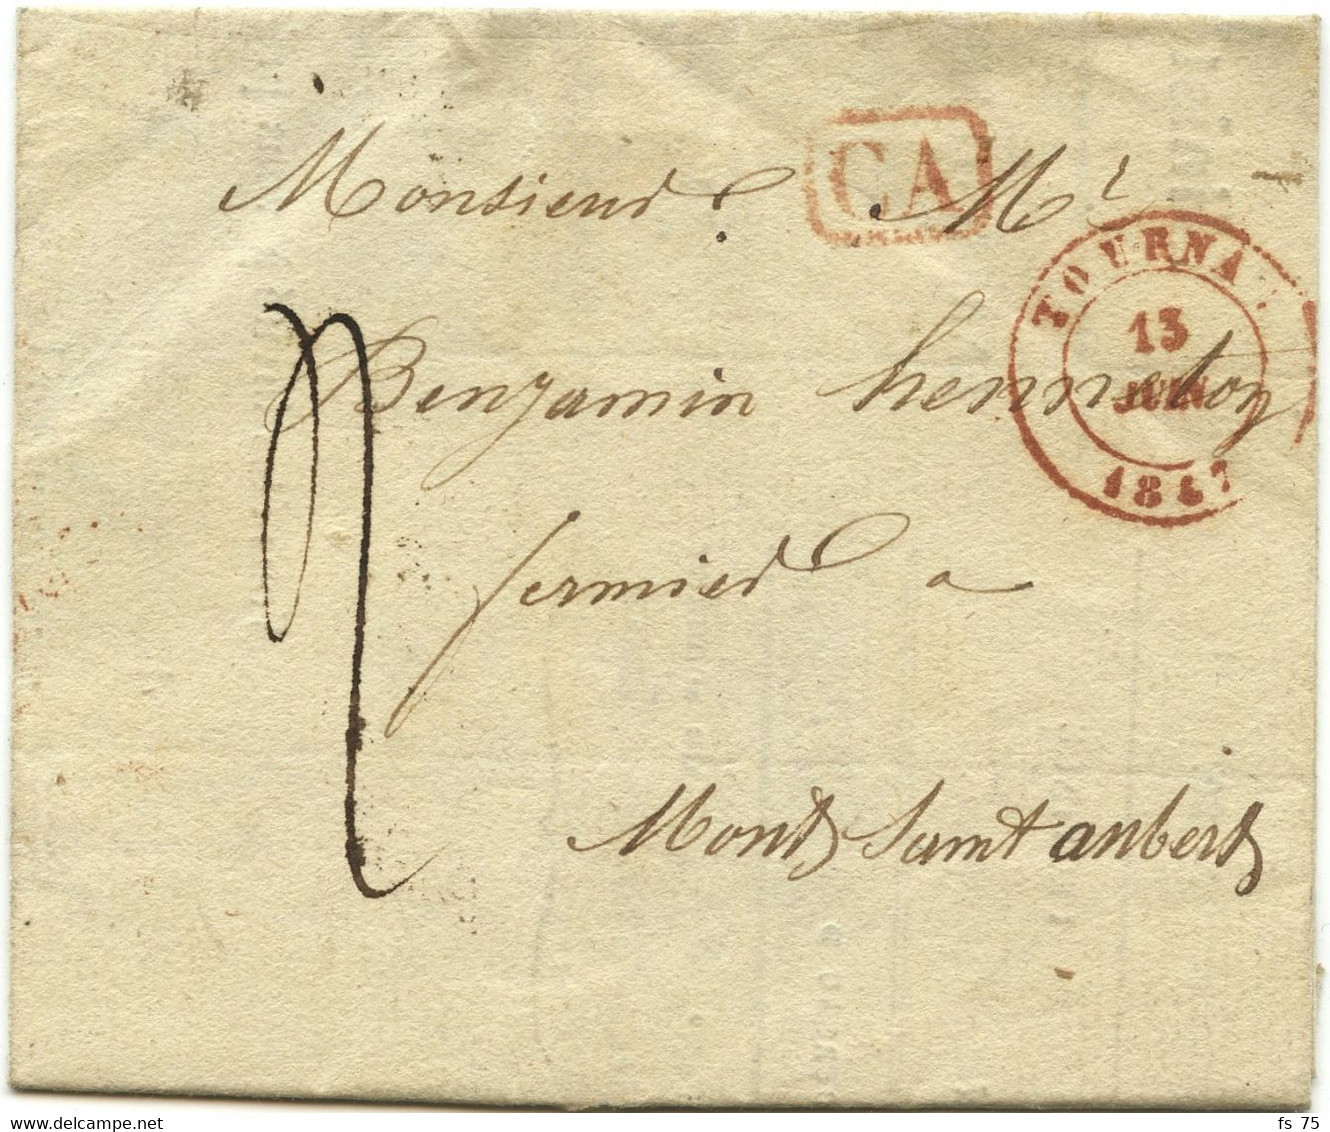 BELGIQUE - TOURNAY + CA + AU VERSO TOURNAY + 3 TOUT EN ROUGE EN LOCAL, 1847 - 1830-1849 (Unabhängiges Belgien)